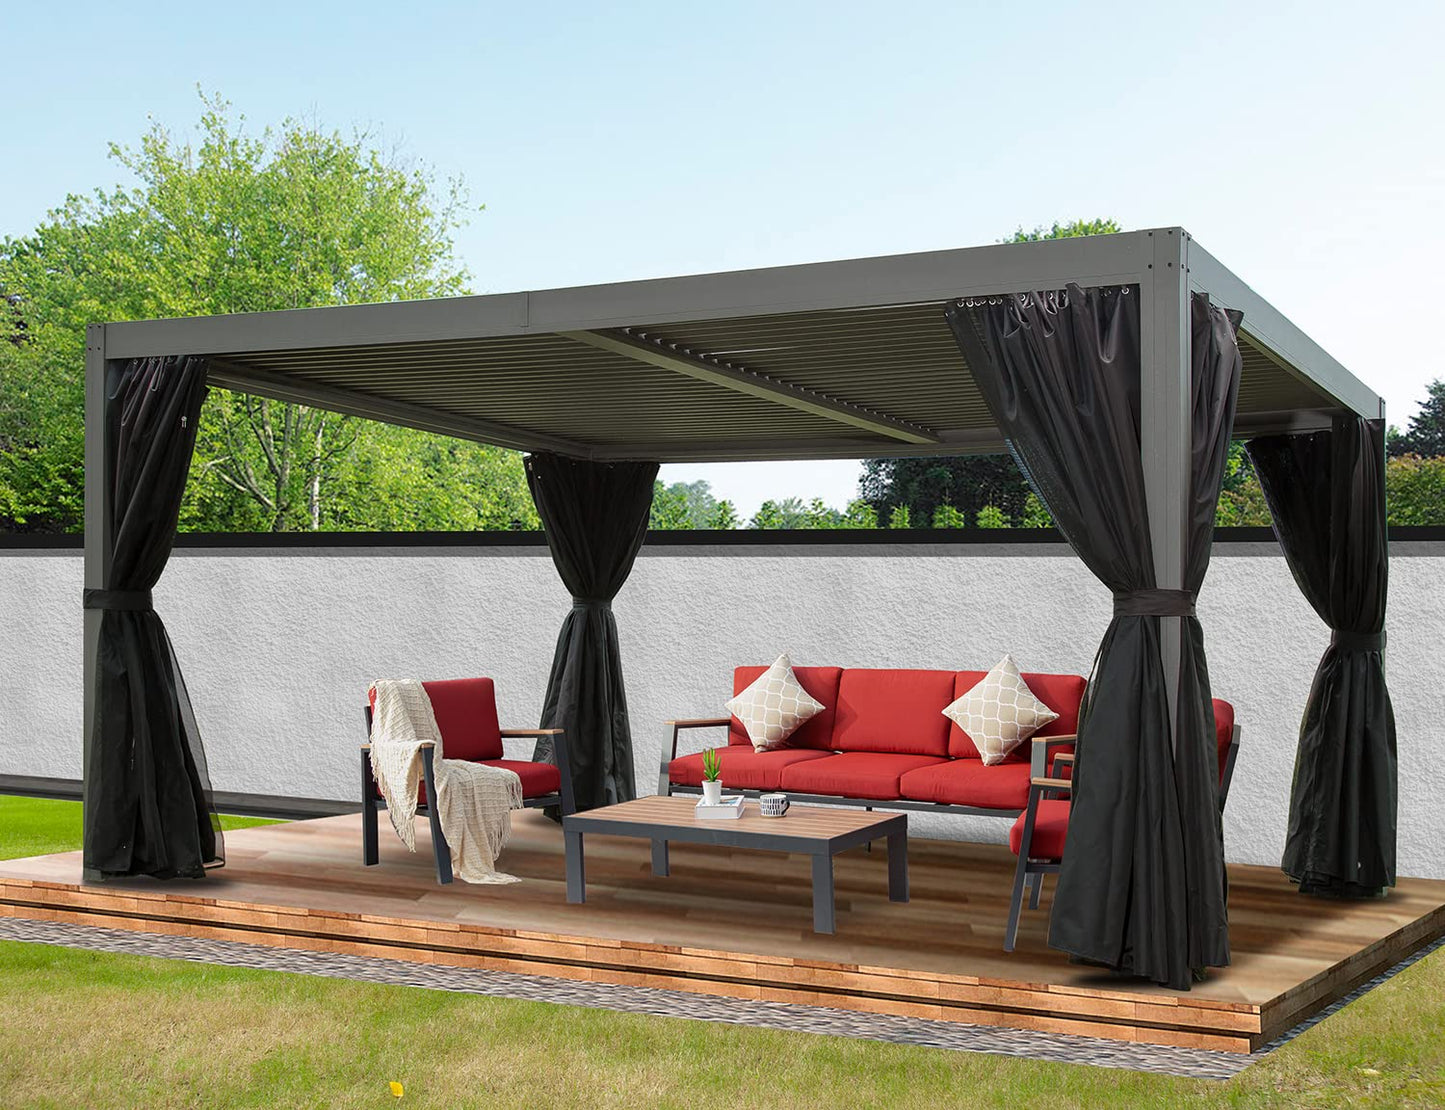 Domi Louvered Pergola 12' × 16', Outdoor Aluminium Pergola with Adjustable Roof, Curtains and Netting, Hardtop Gazebo for Patio, Deck, Garden, Yard, Beach(Gray)